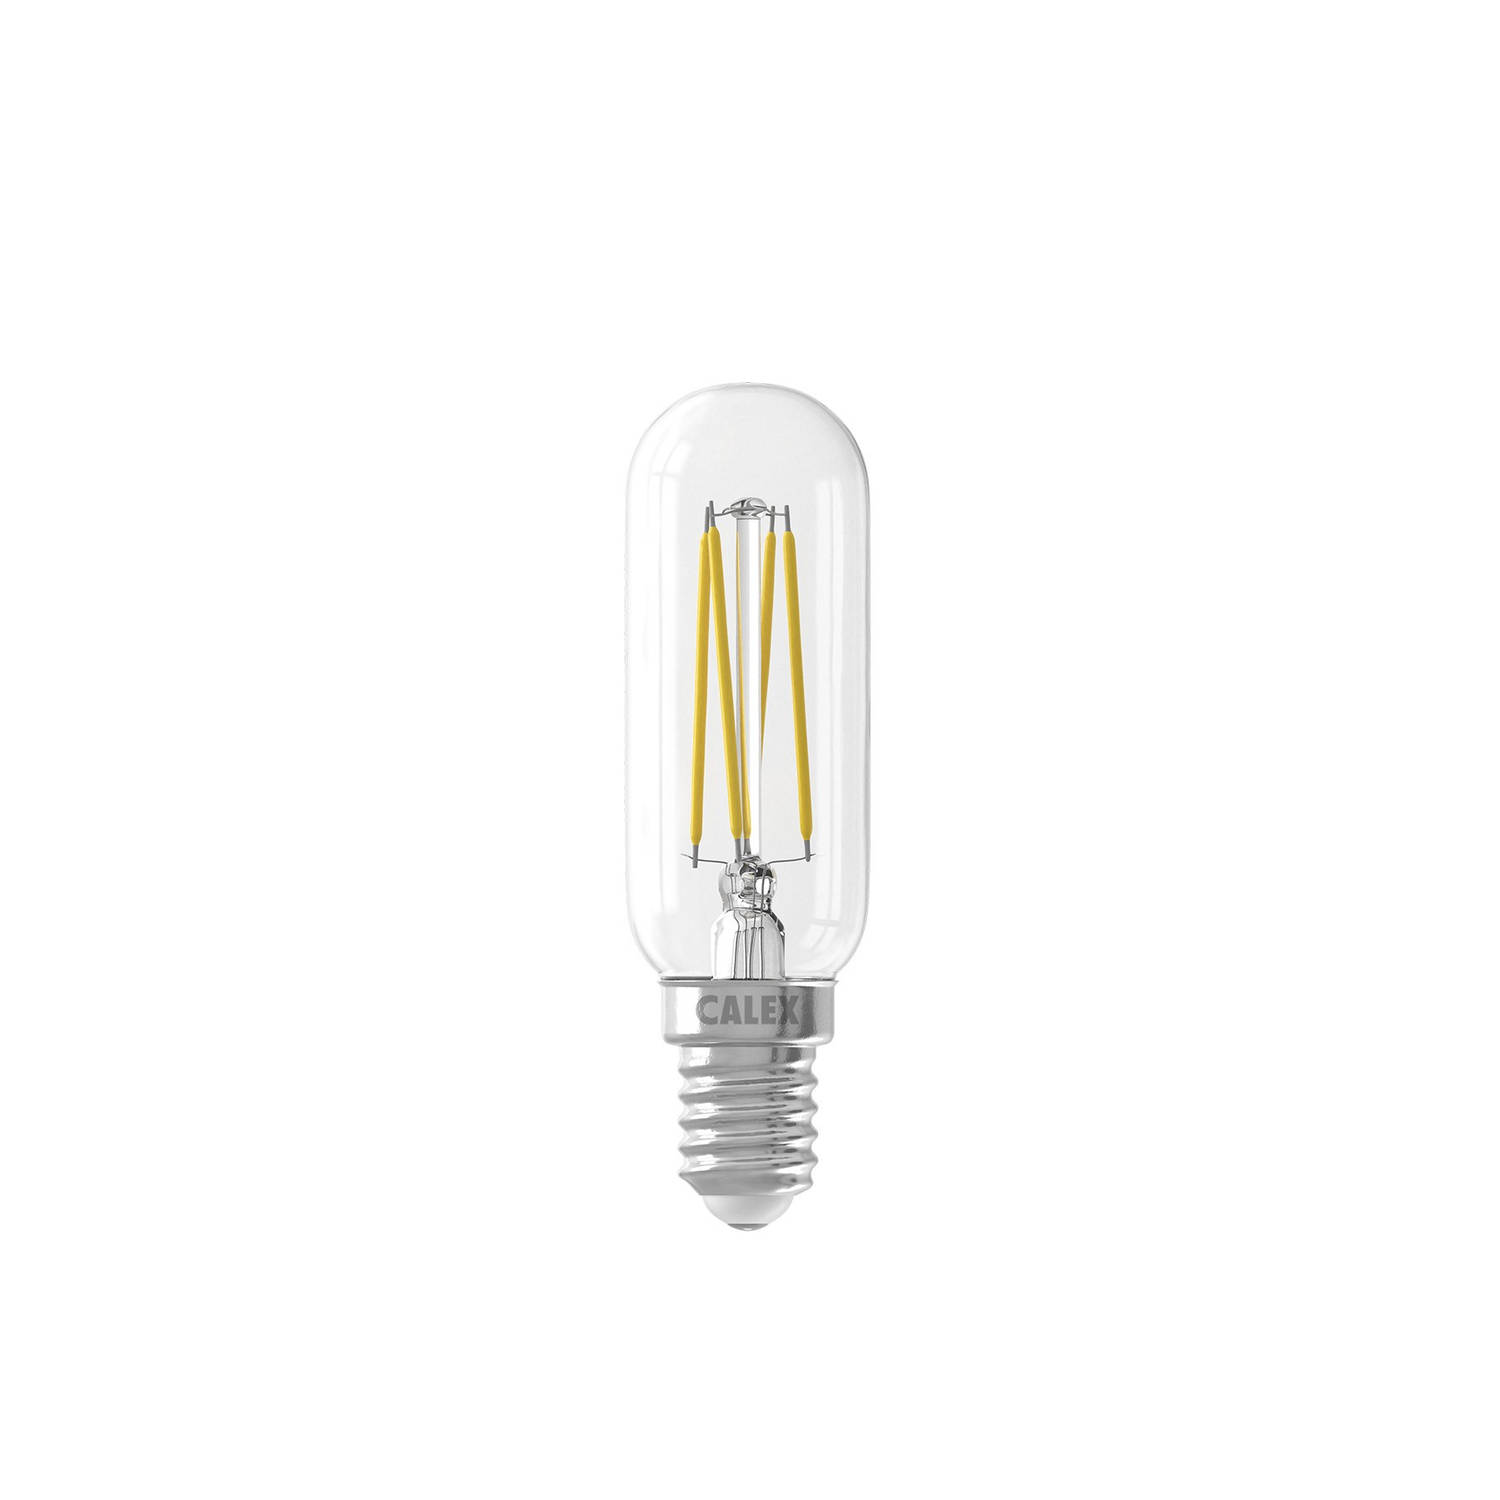 Calex LED volglas Filament Buismodel 220-240V 3,5W 310lm E14 T25x85, Helder 2700K Dimbaar